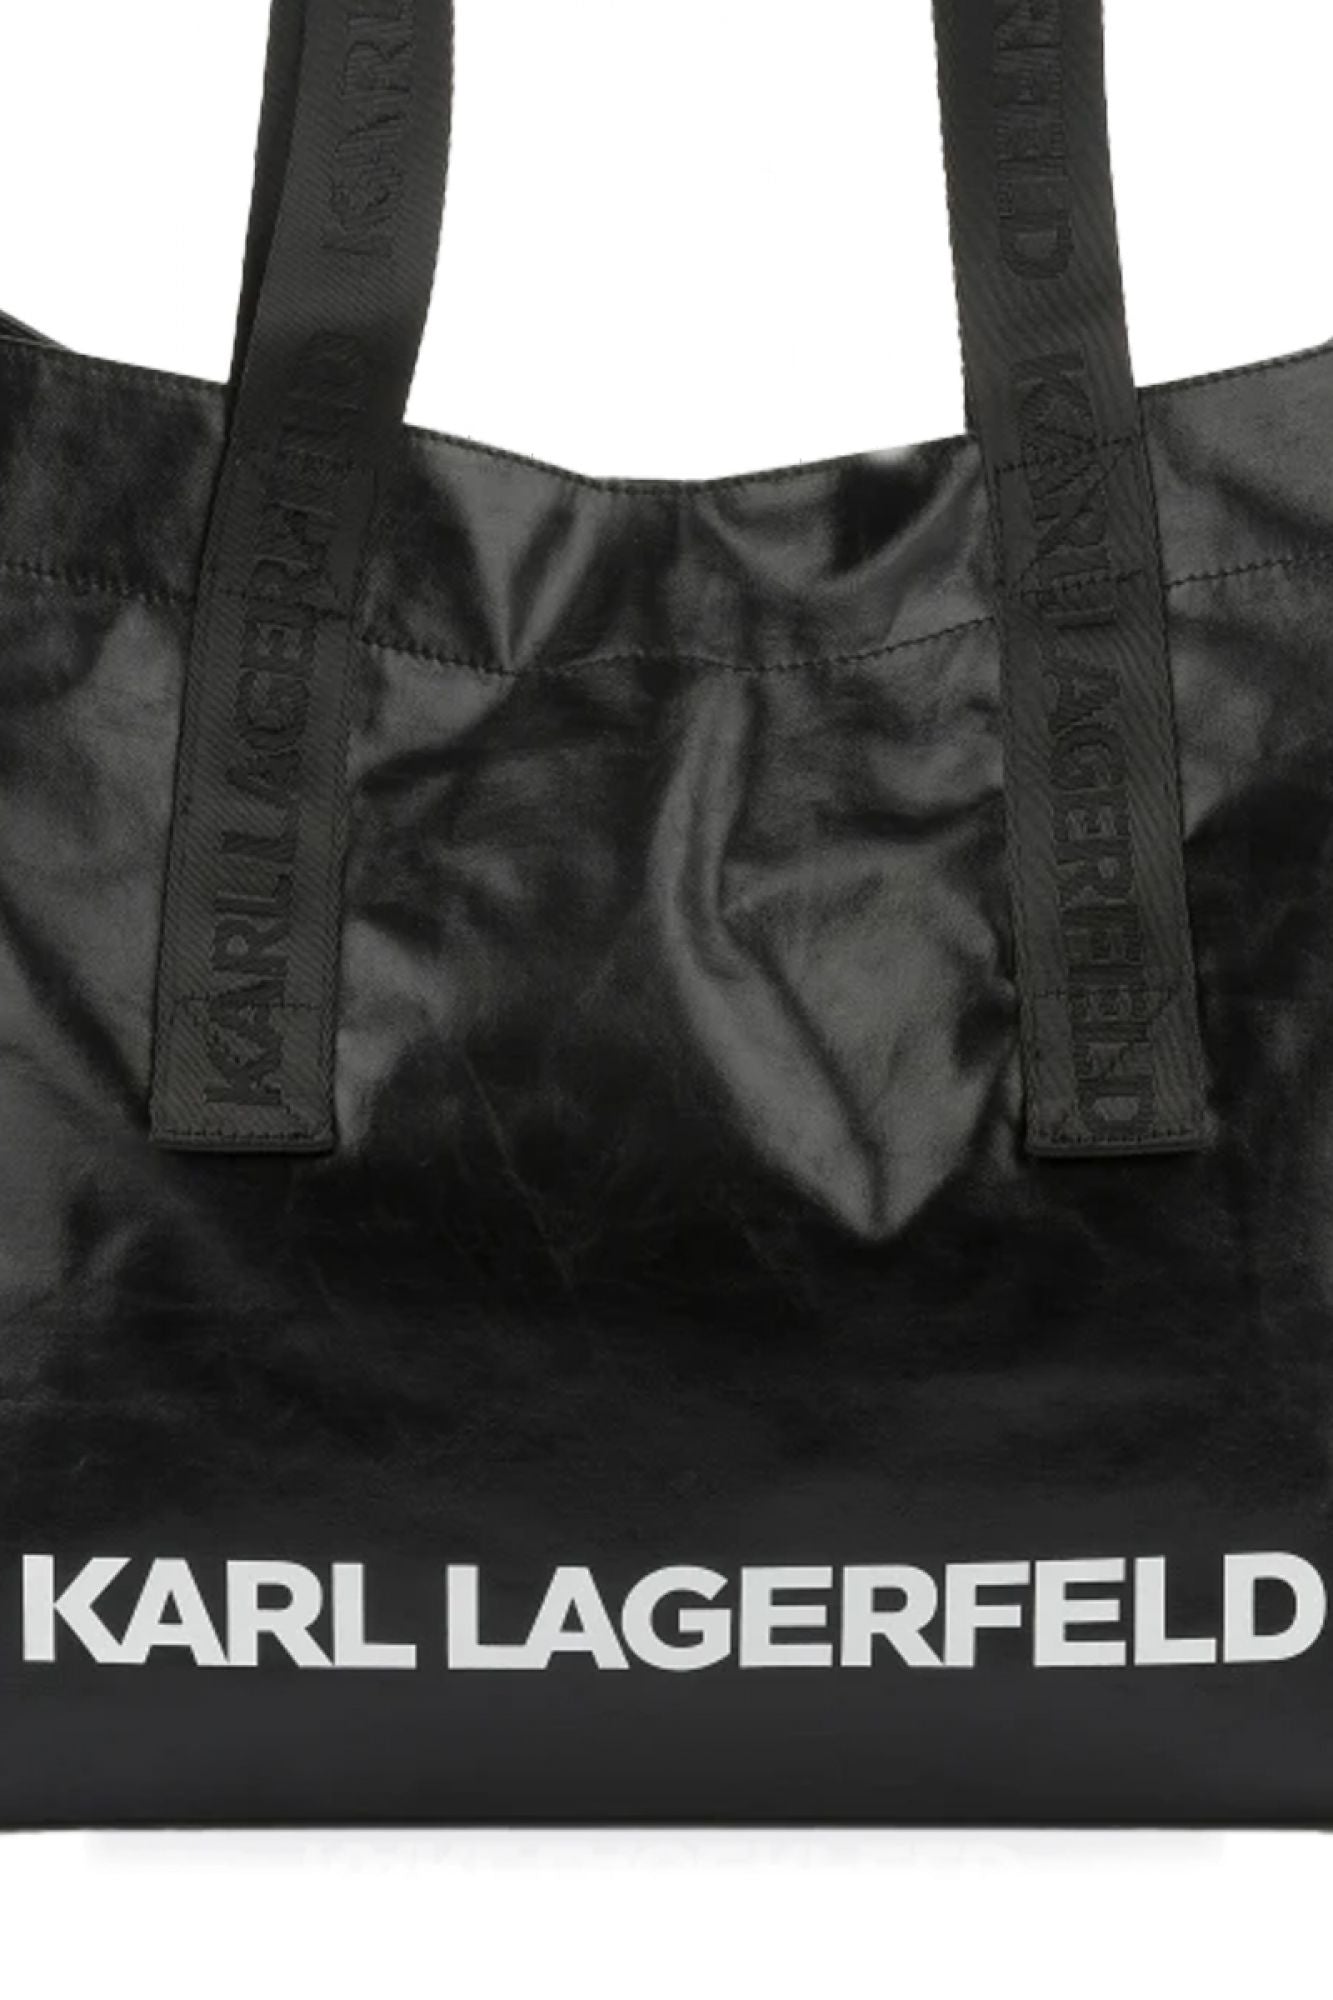 KARL LAGERFELD K/ESSENTIAL COATED SHOPPER en color NEGRO (4)